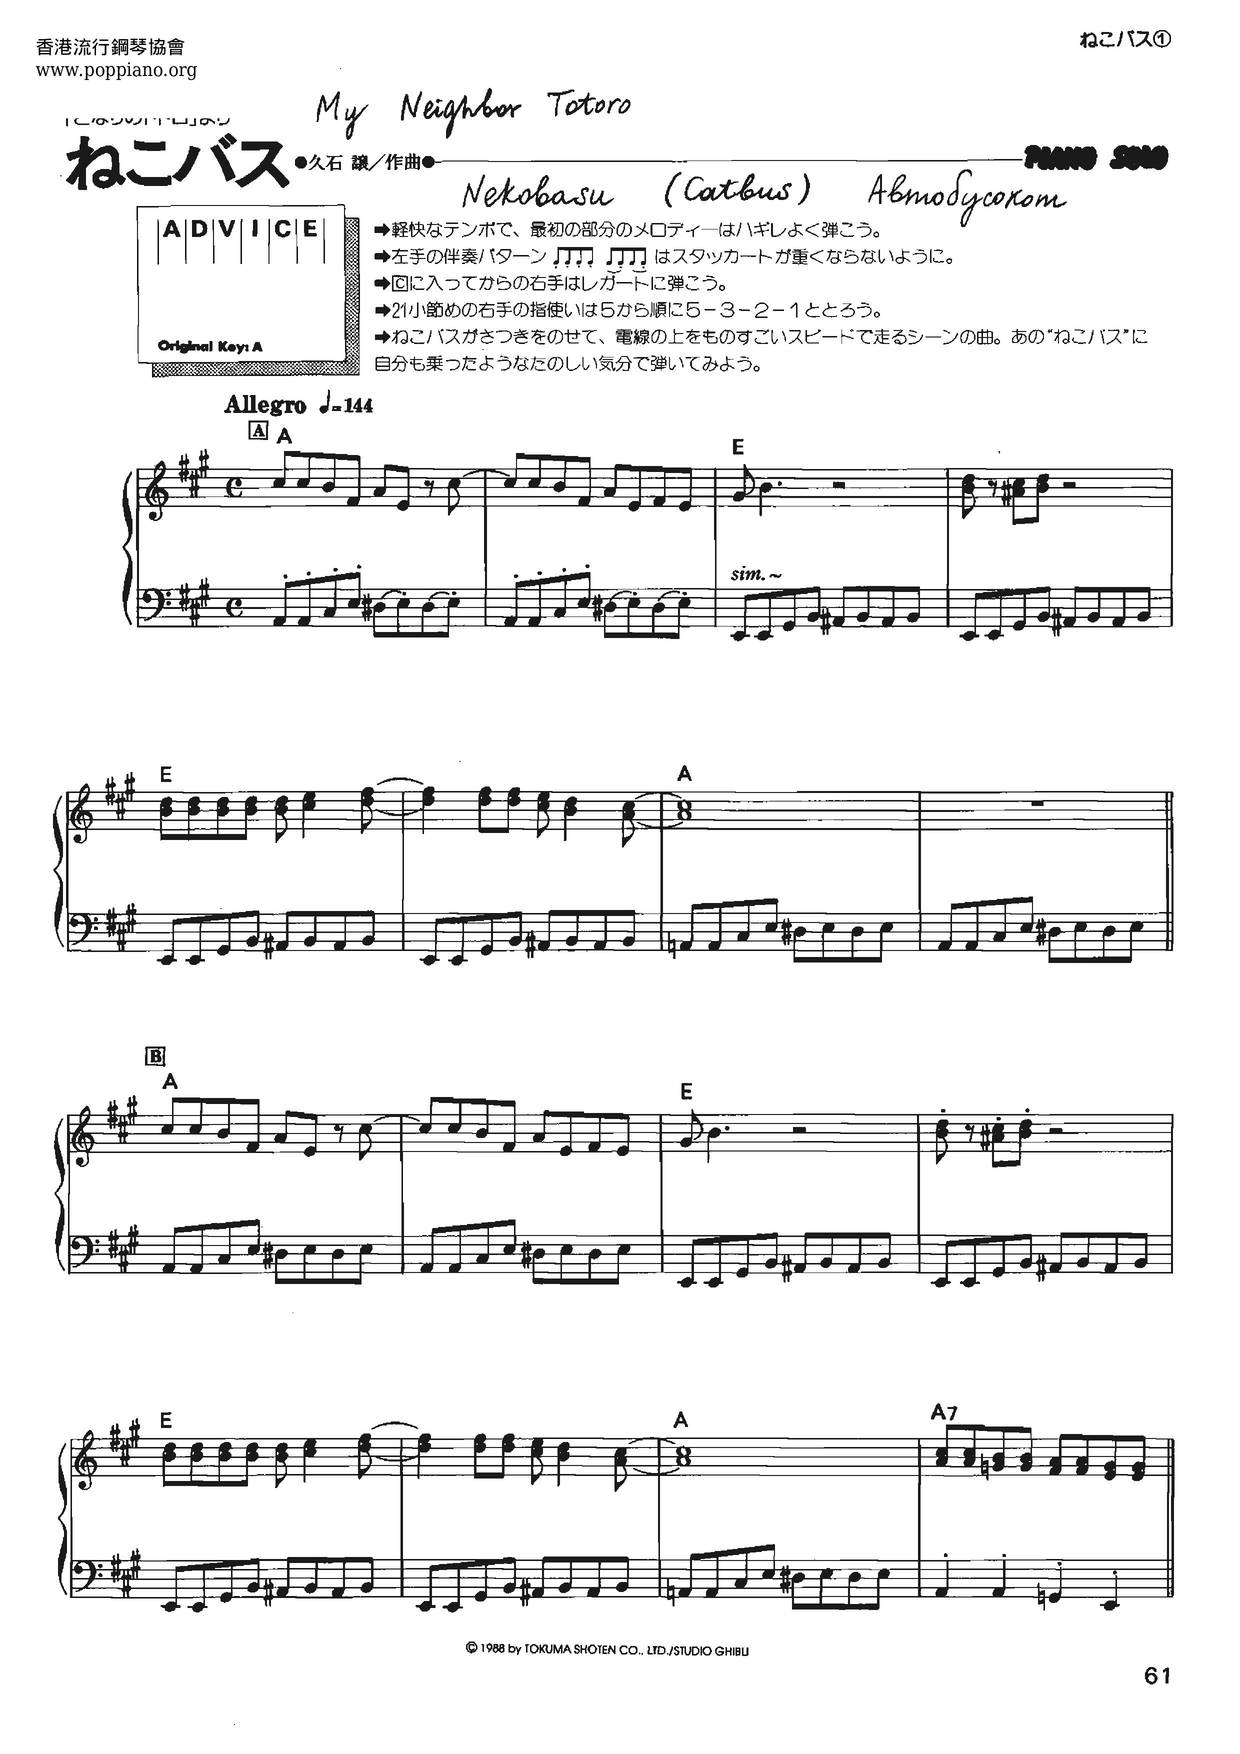 My Neighbor Totoro - Catbus Score